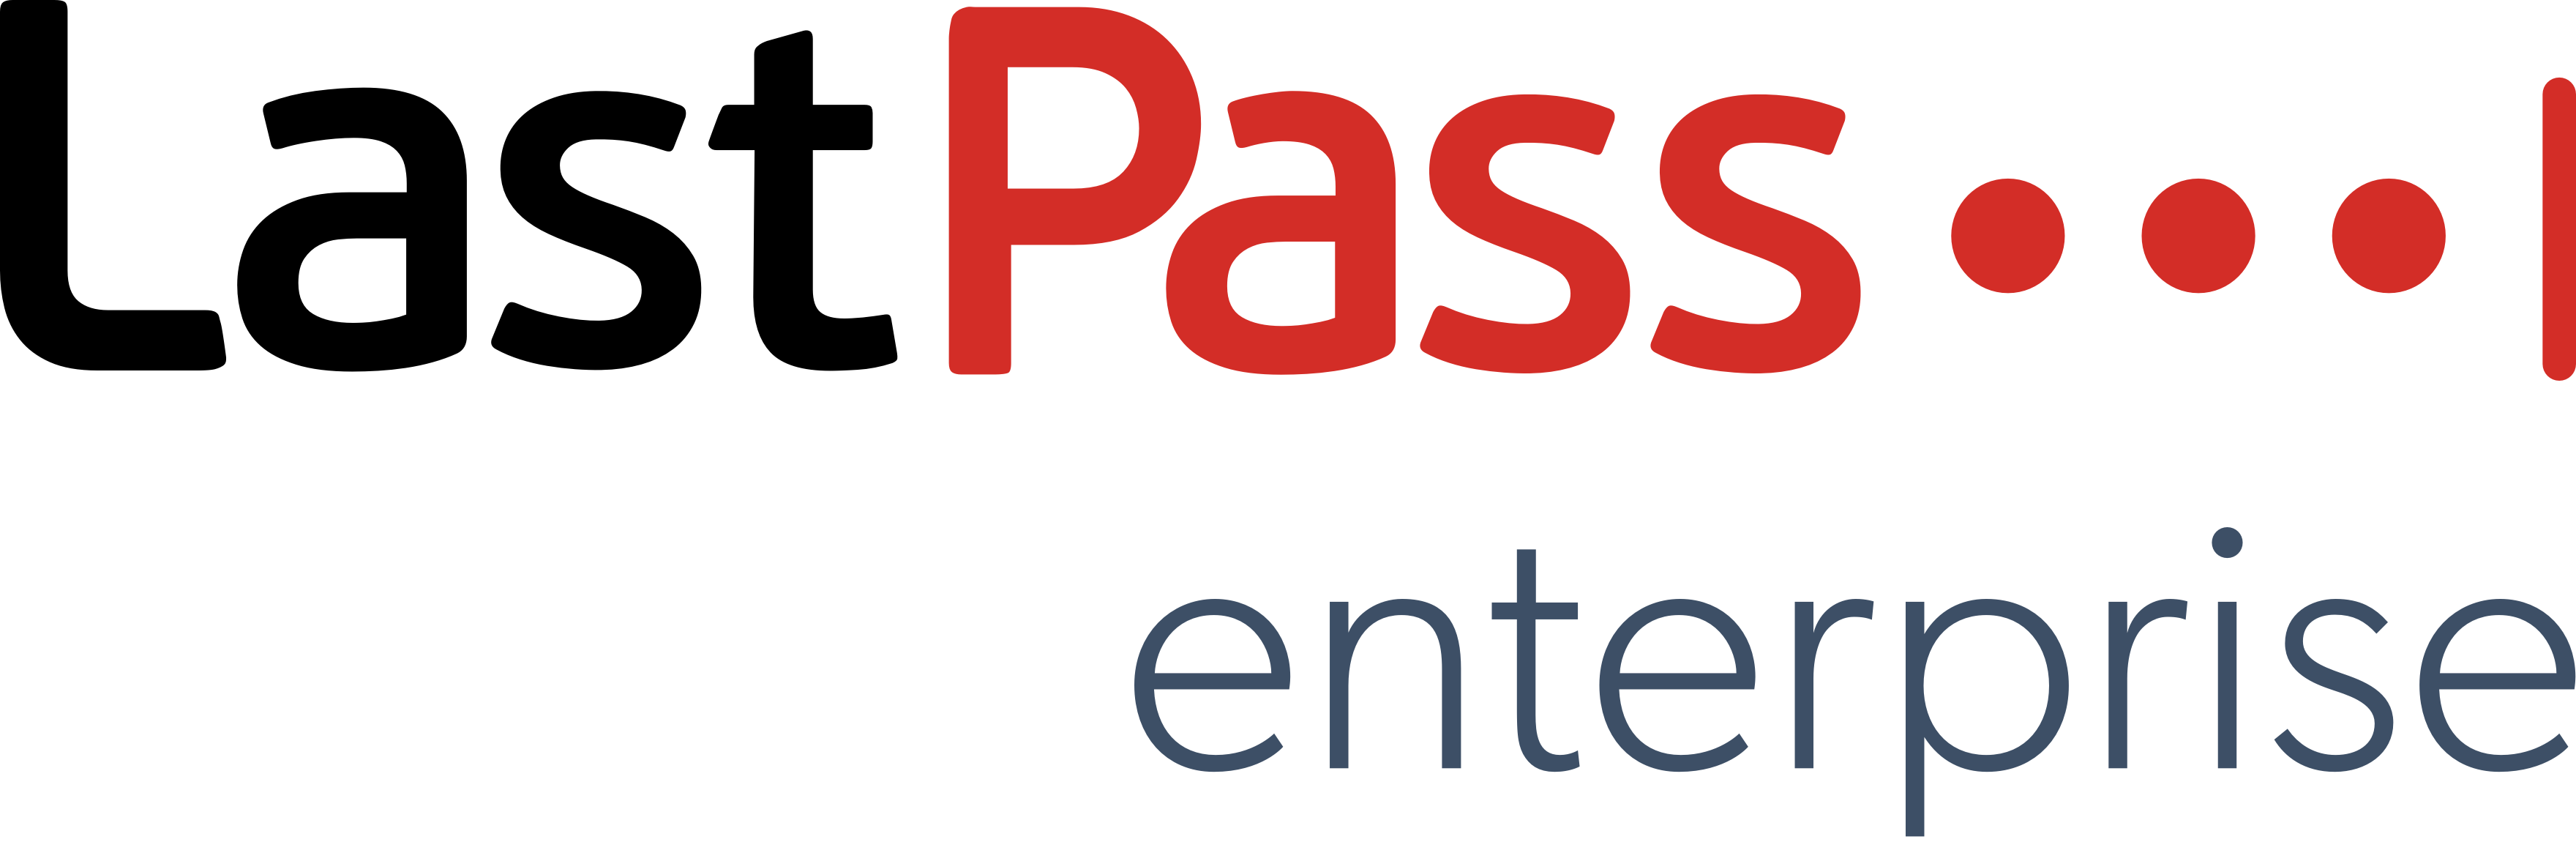 LastPass Enterprise Logo